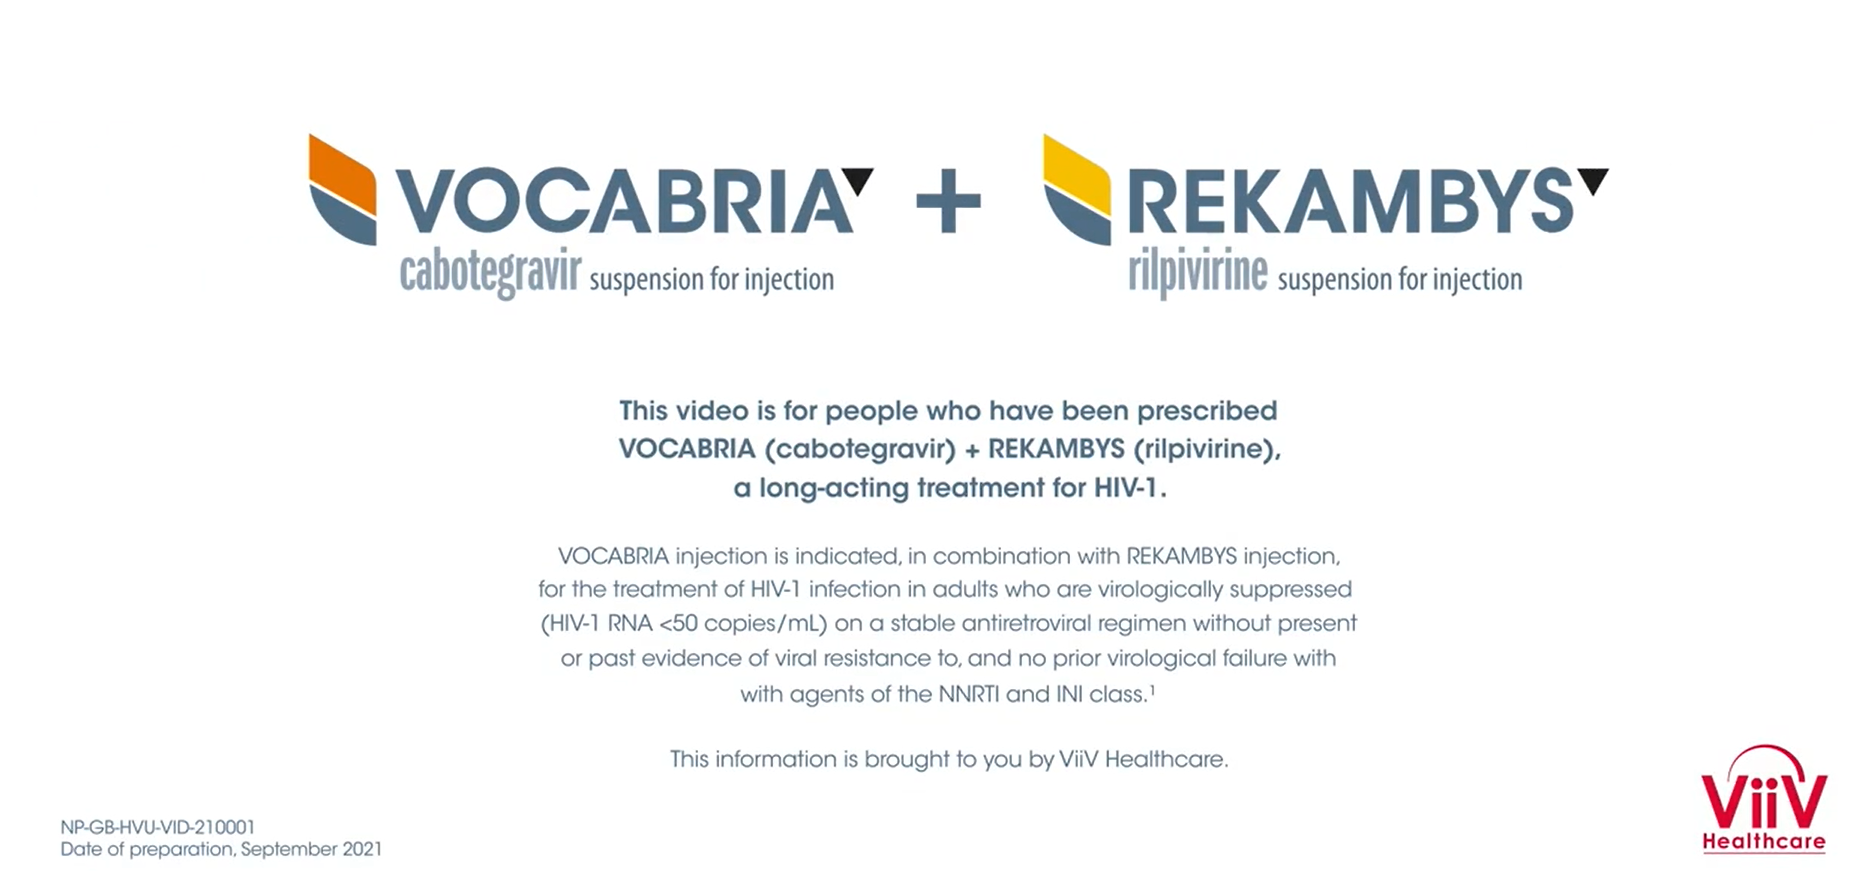 vocabria-plus-rekambys-video-thumbnail